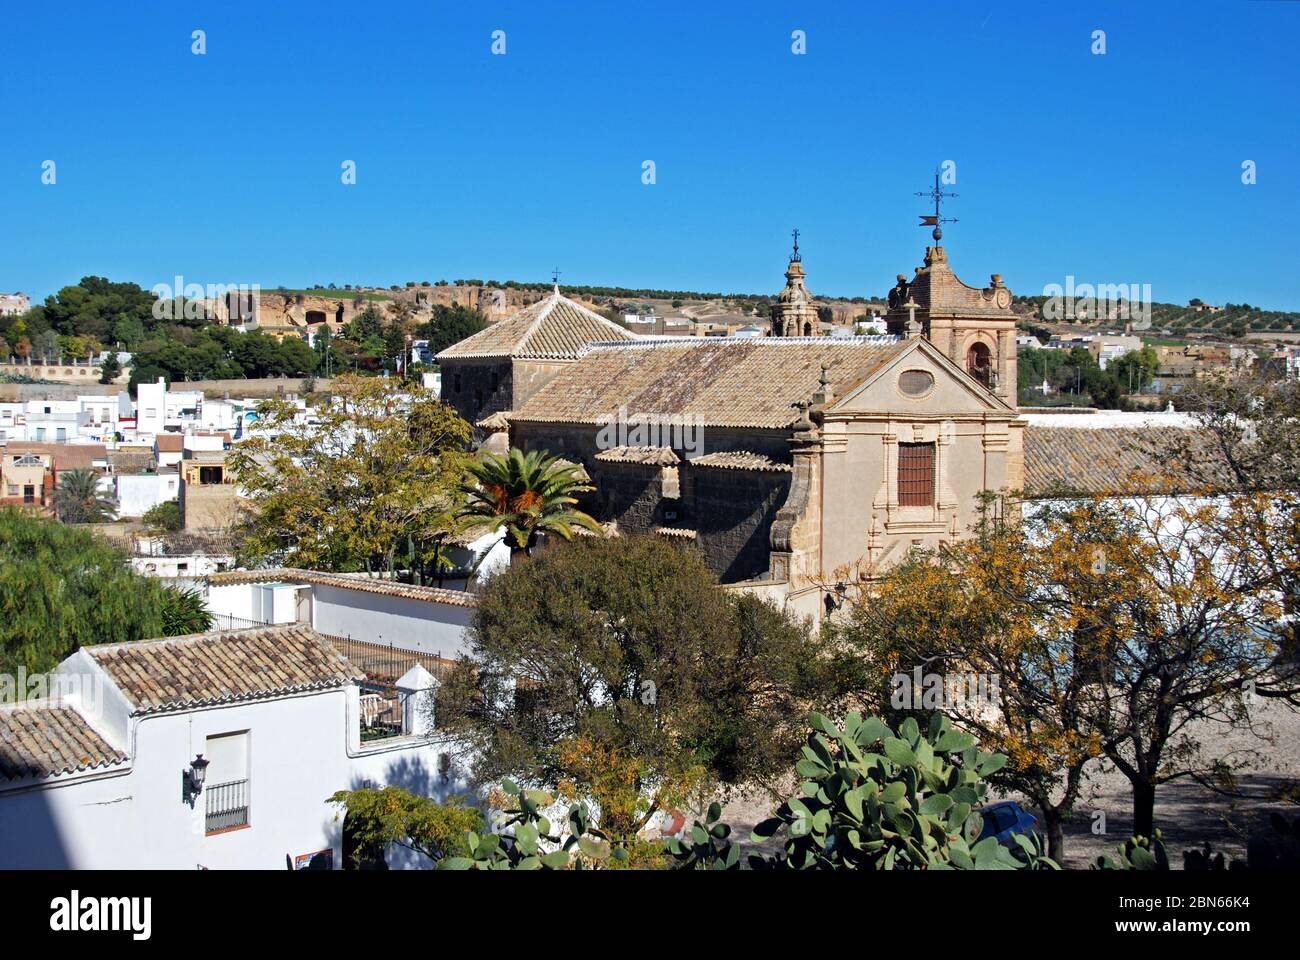 Museum of sacred art, Incarnation Monastery (Monasterio de la Encarnacion), Osuna, Seville Province, Andalucia, Spain, Europe. Stock Photo